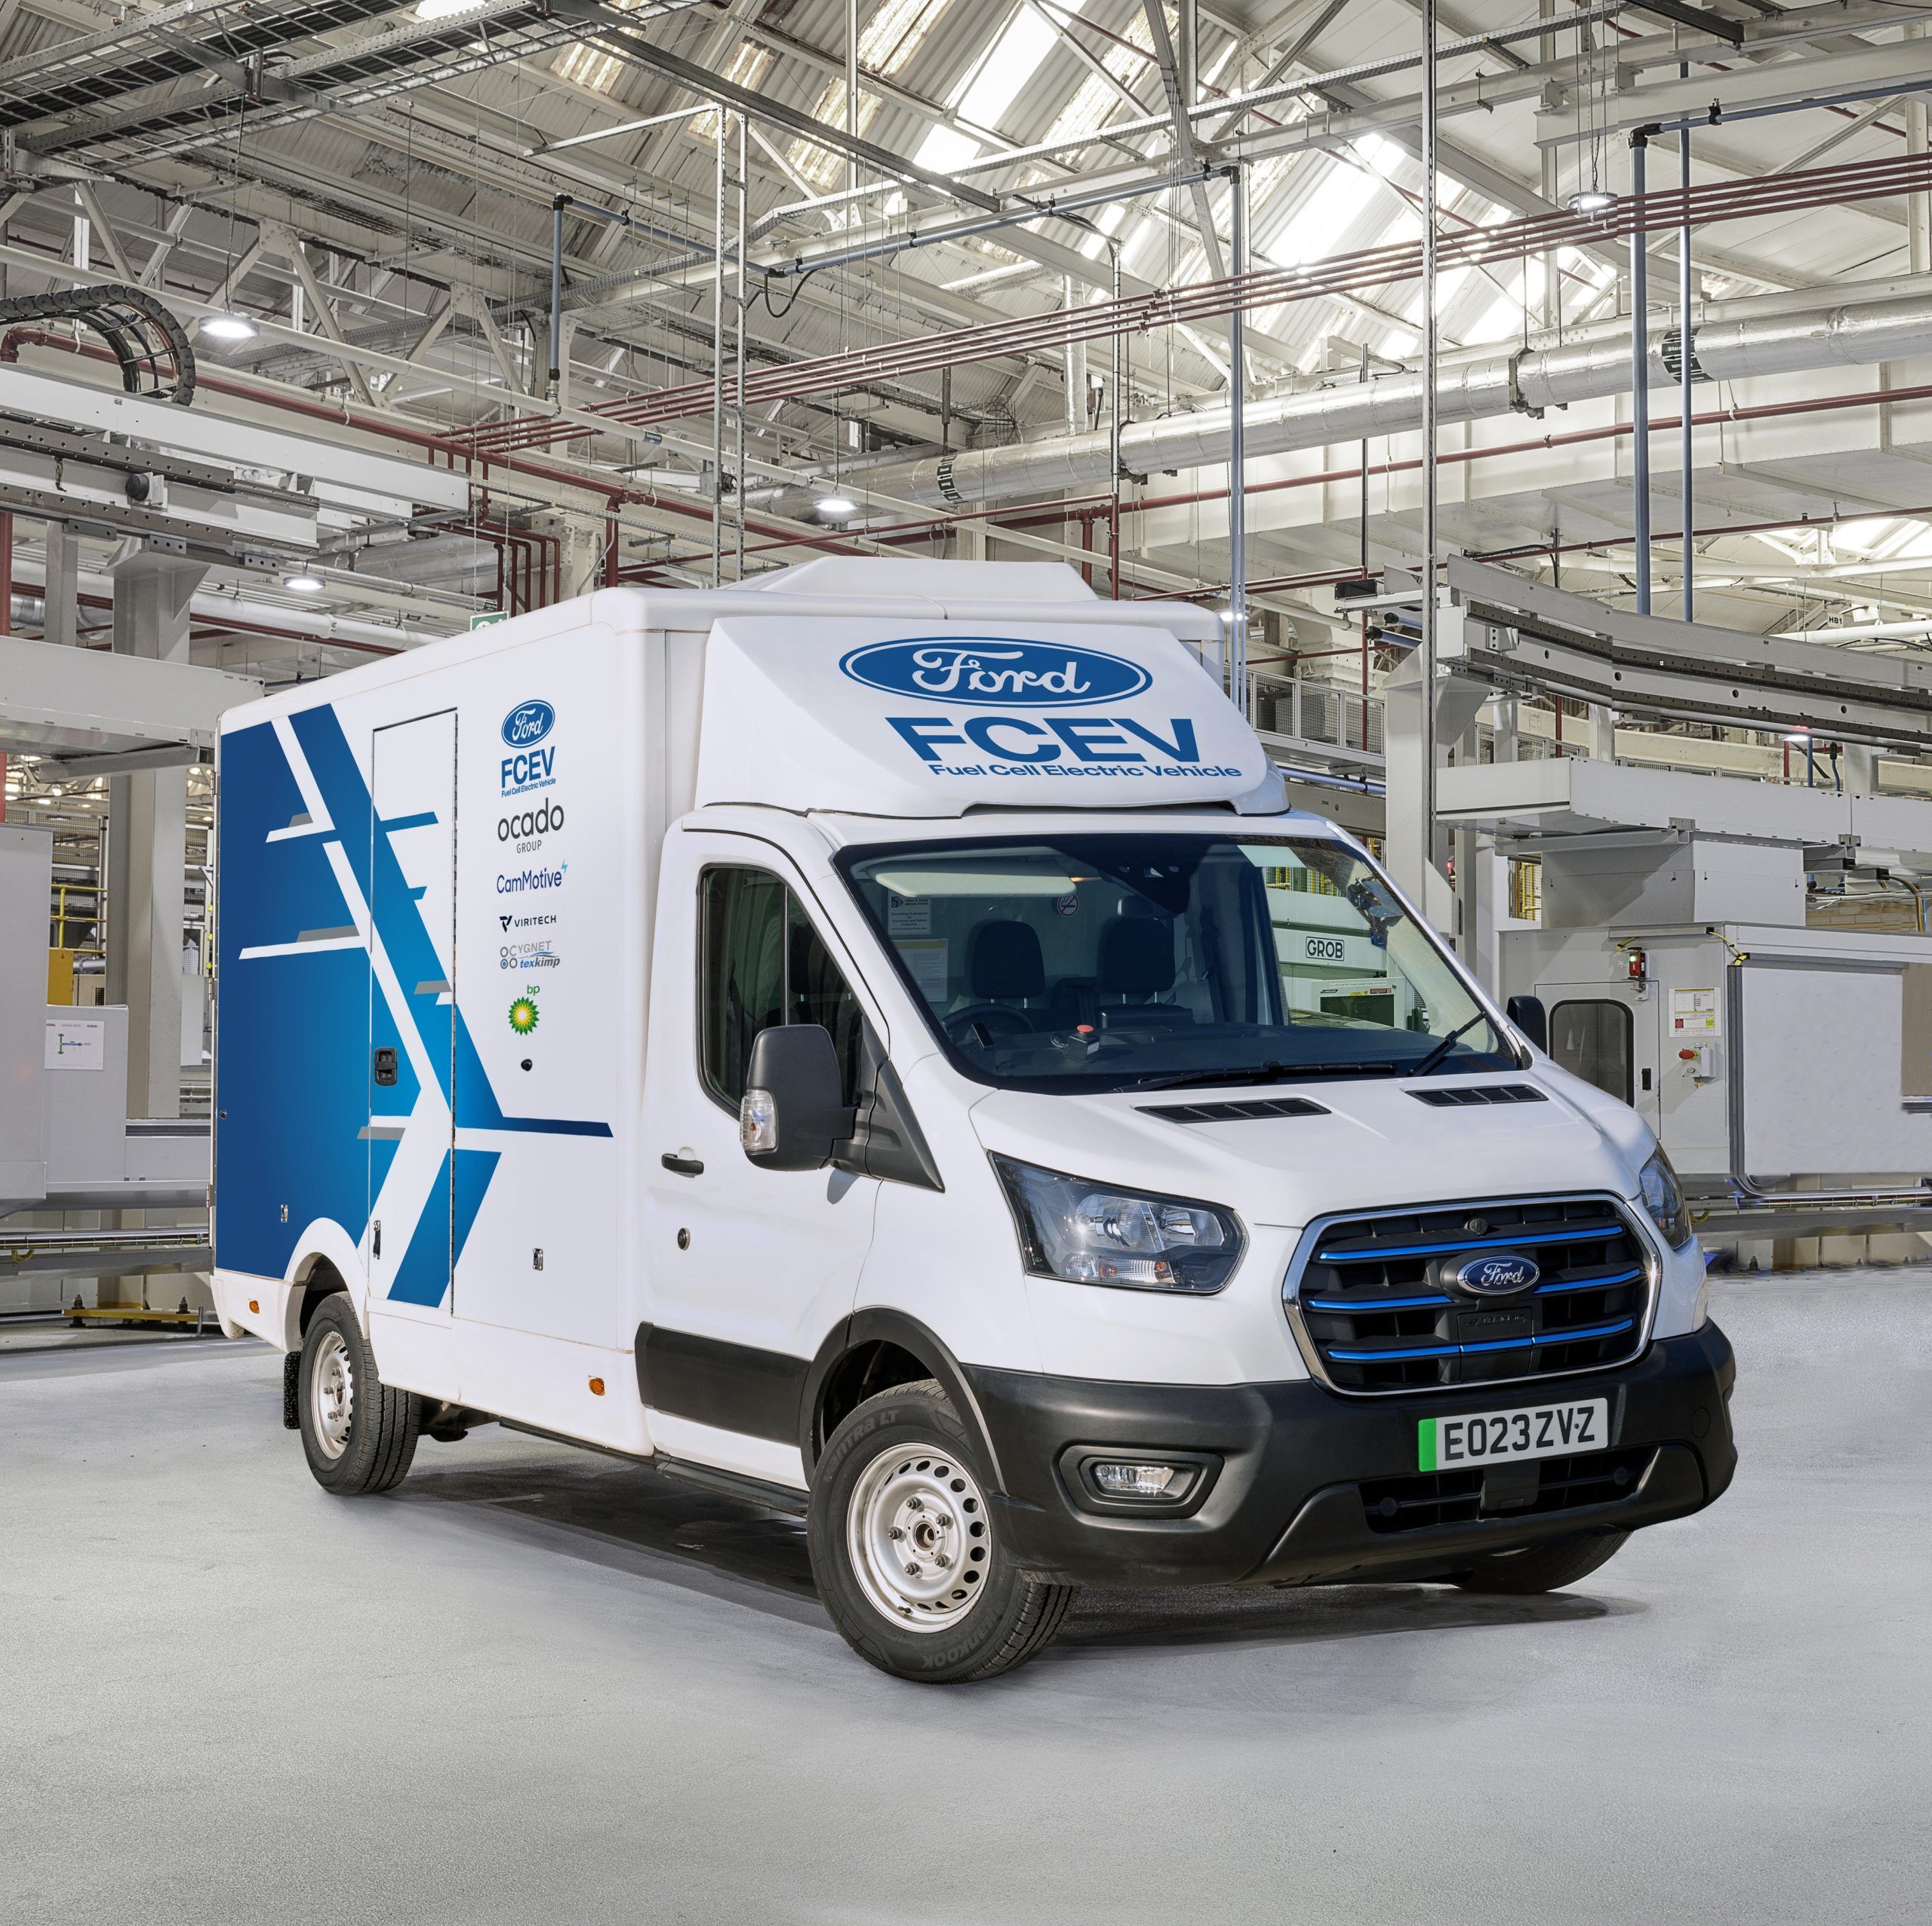 Ford trialling hydrogen technology on E-Transit van - transportandenergy